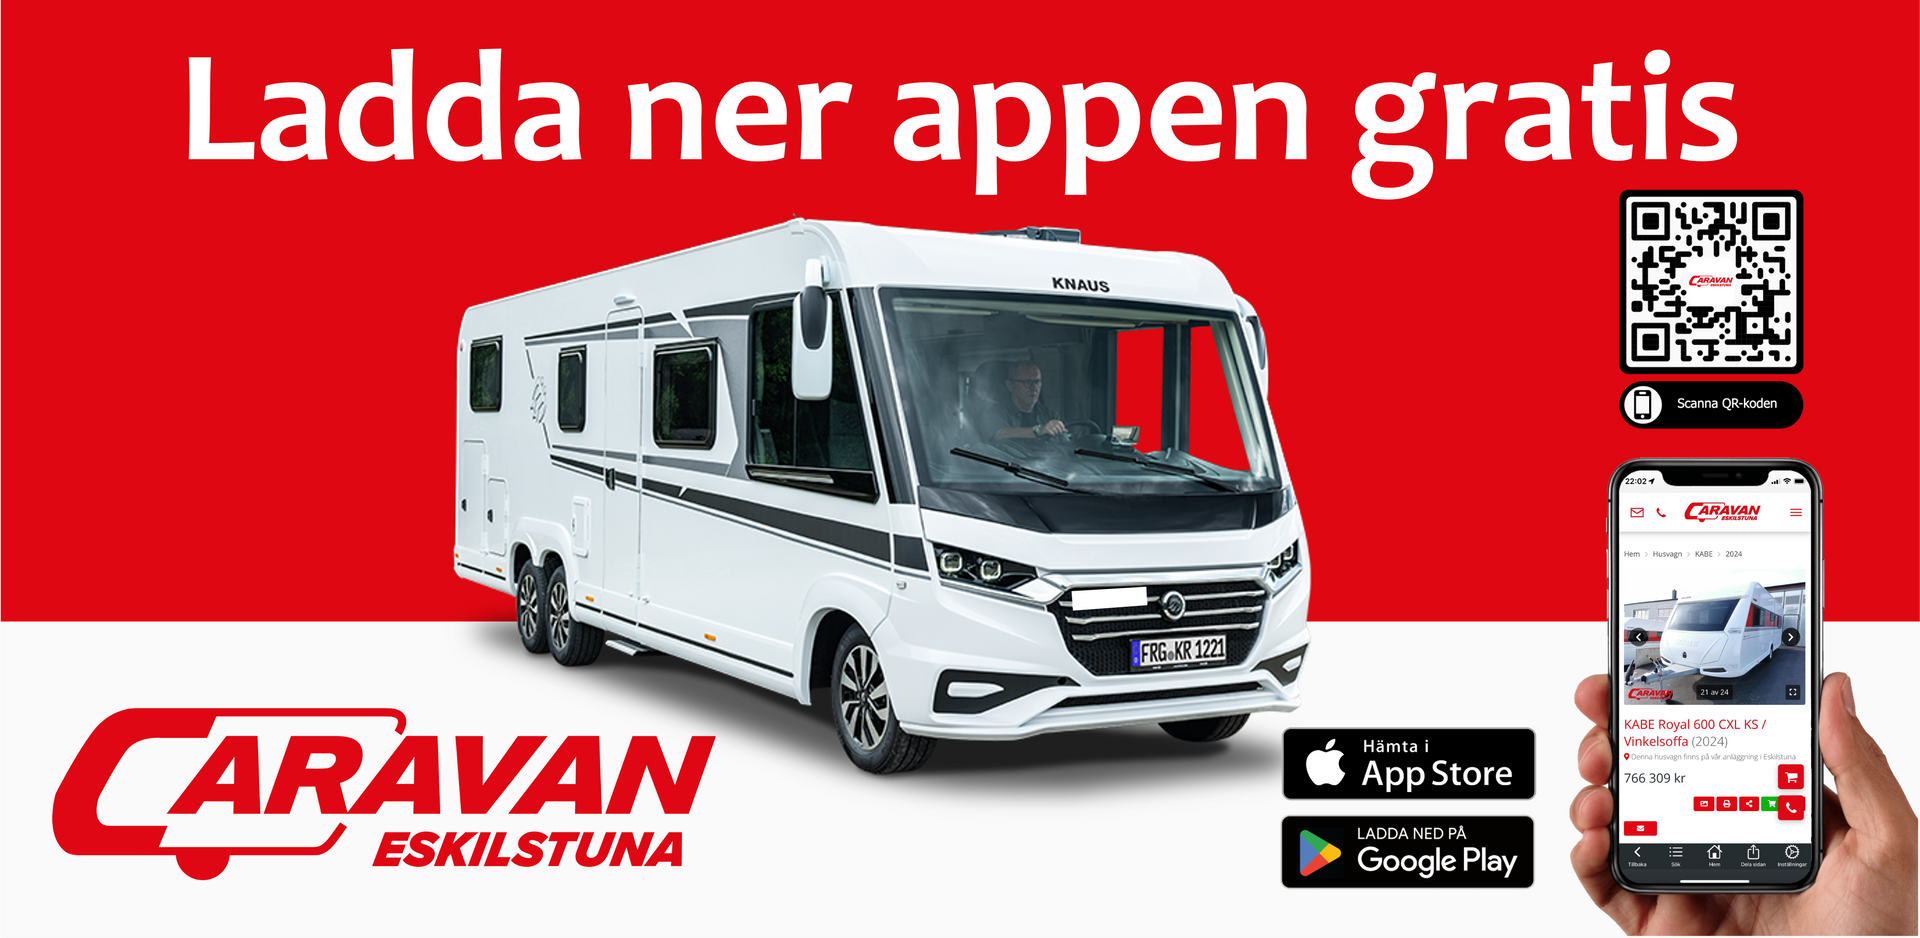 caravan-appen_caravan_eskilstuna_ios_android_app-store_google-play_ladda-ner_iphone_knaus-husbil-röd